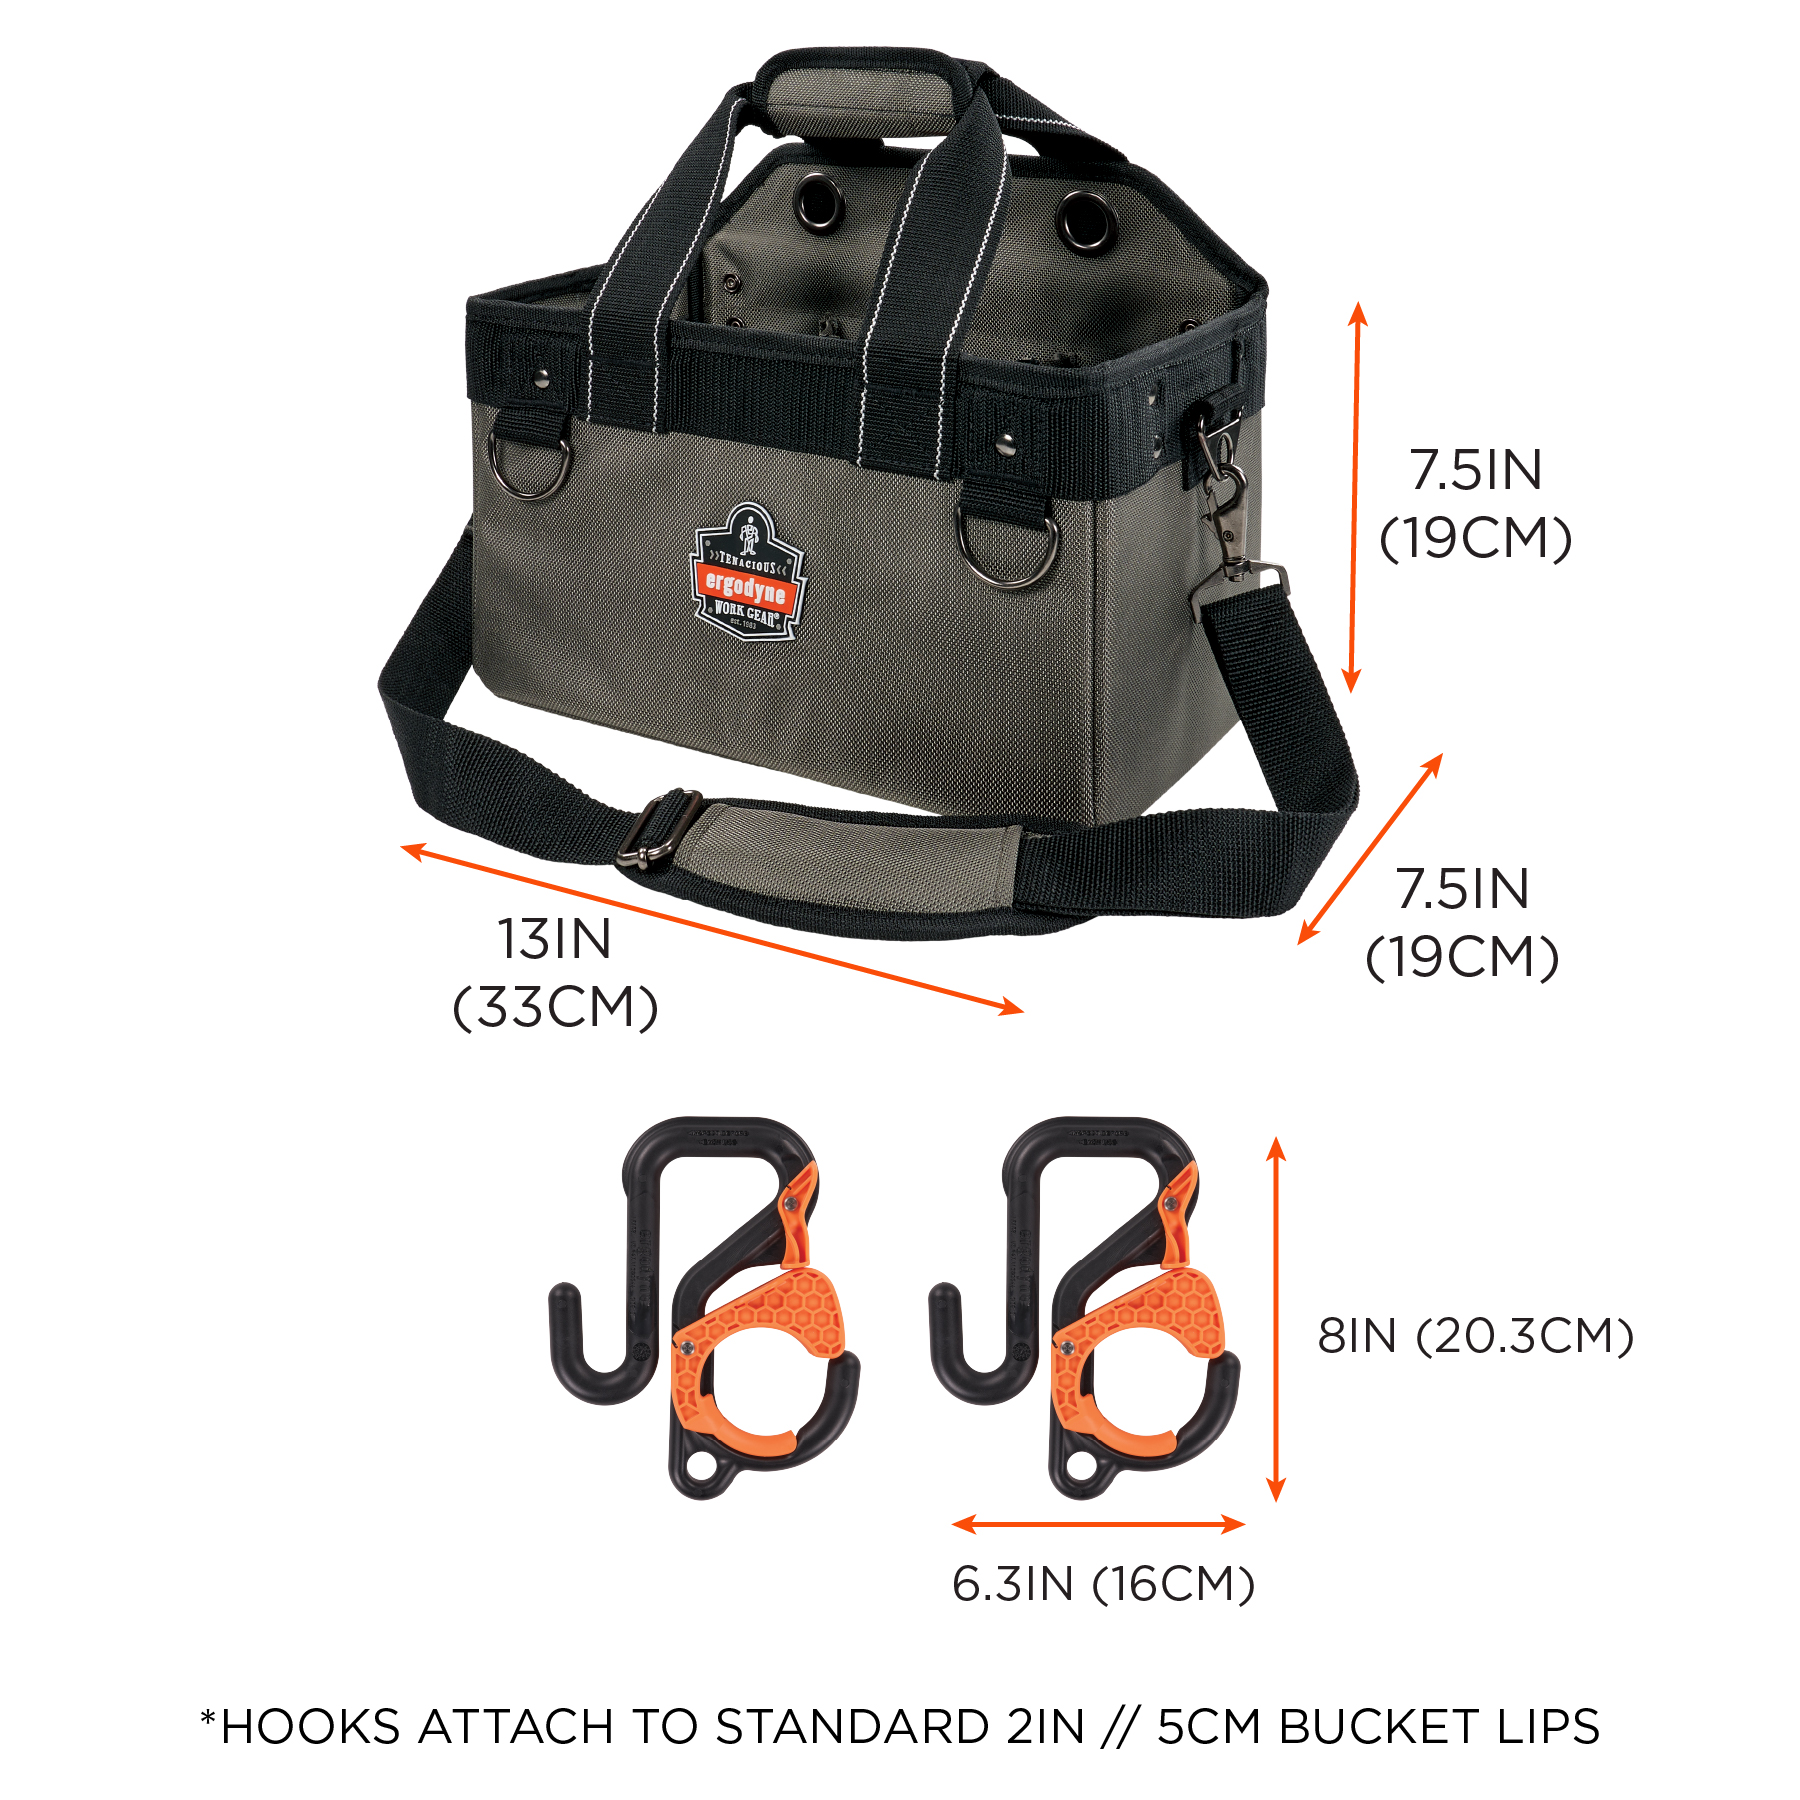 GateMouth Open Face Tool Bag by Bucket Boss